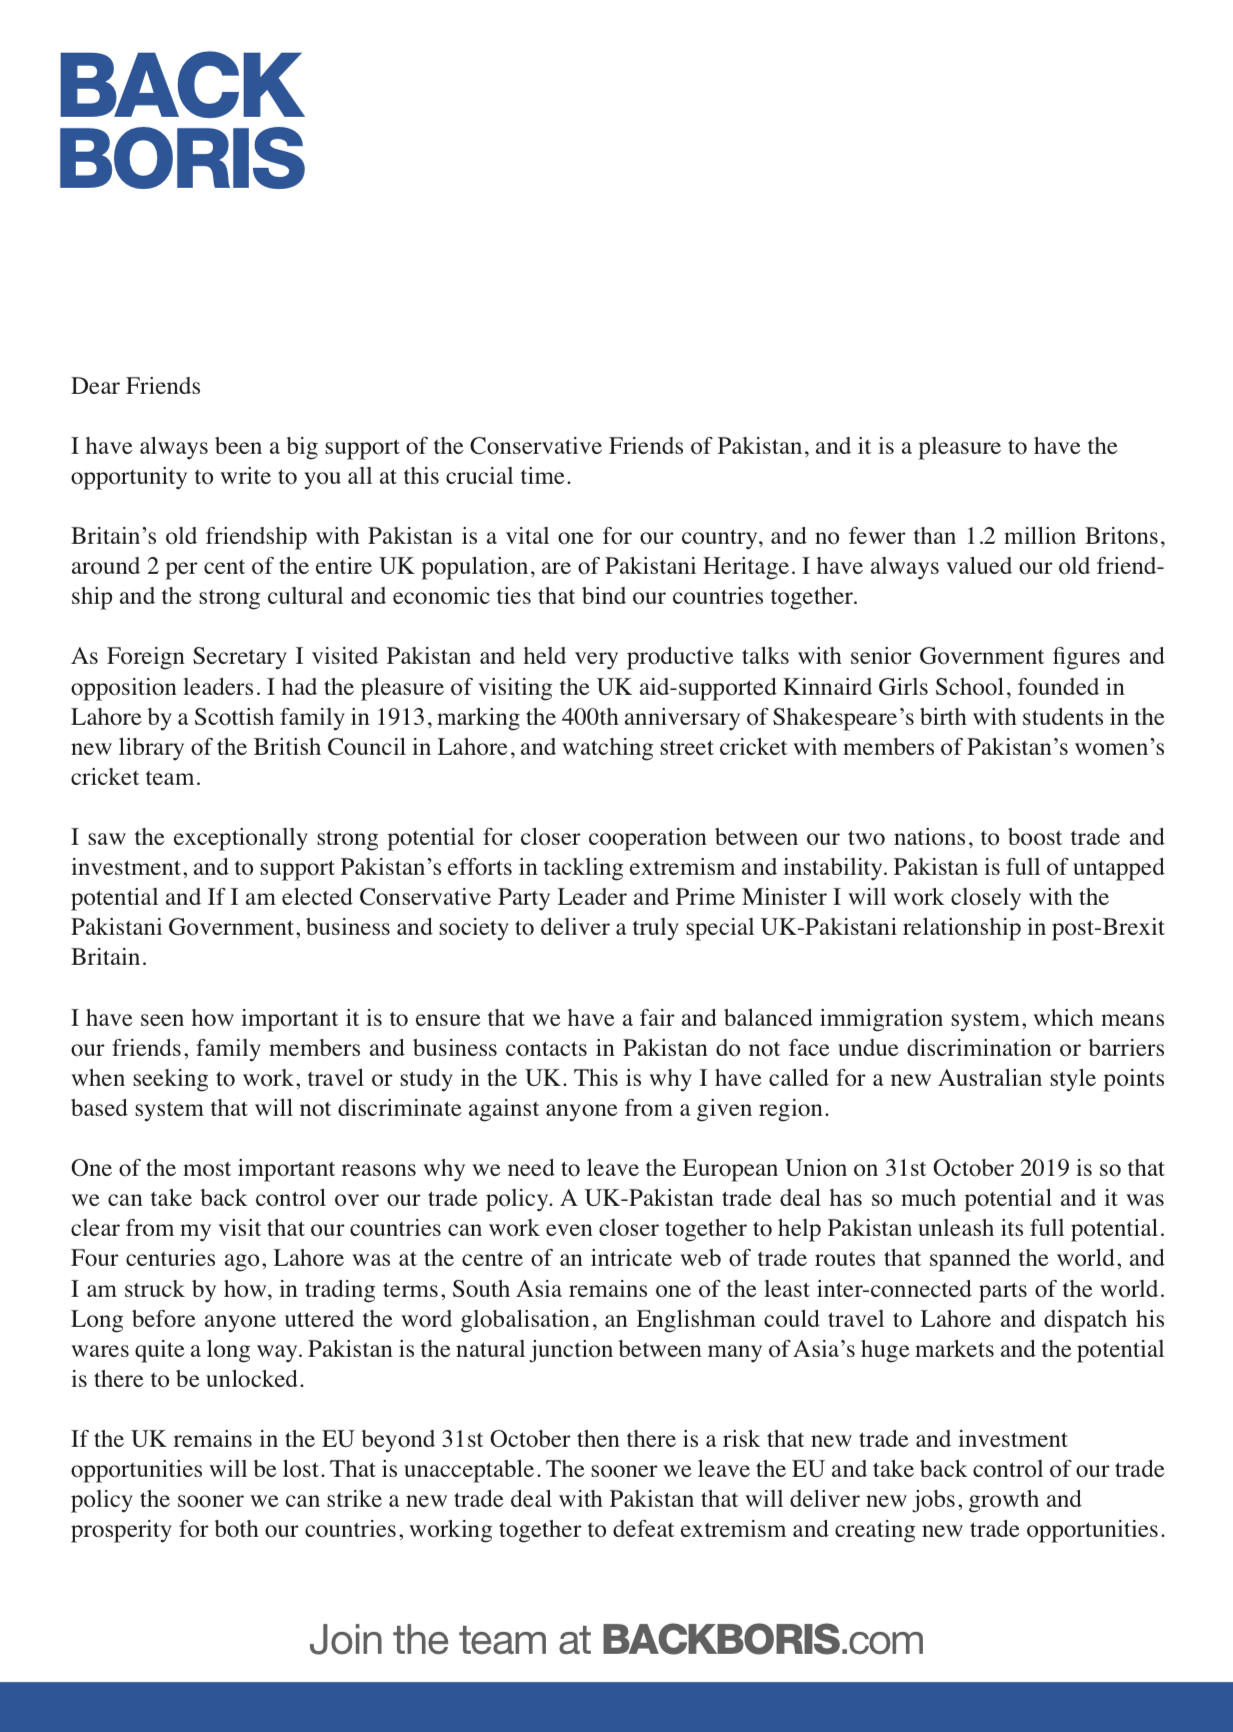 Boris Johnson’s letter to CFOP